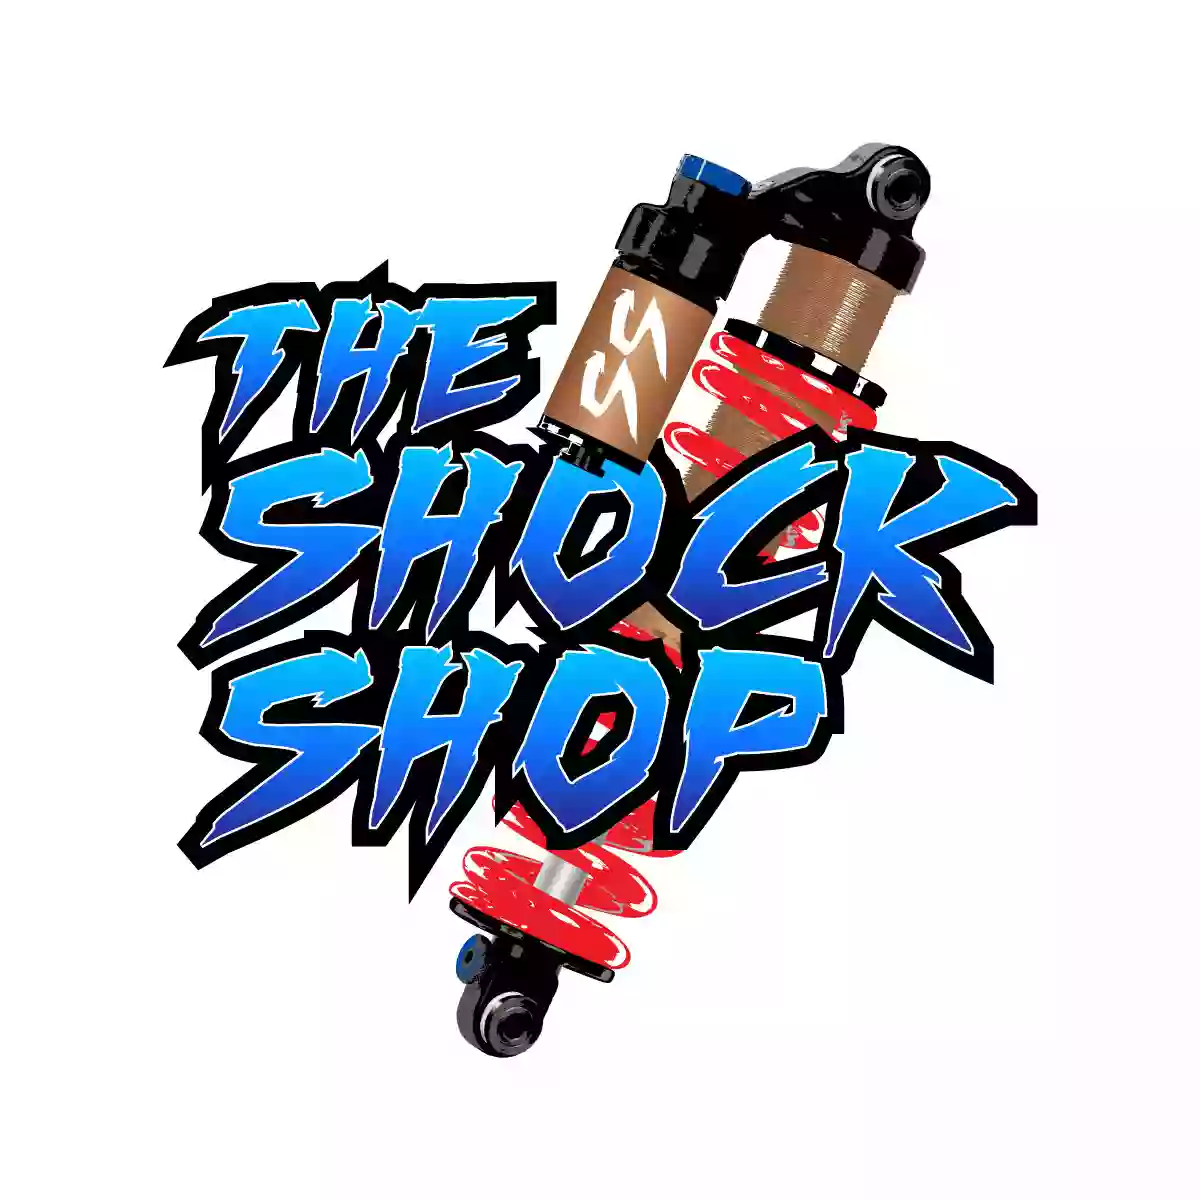 The Shock Shop